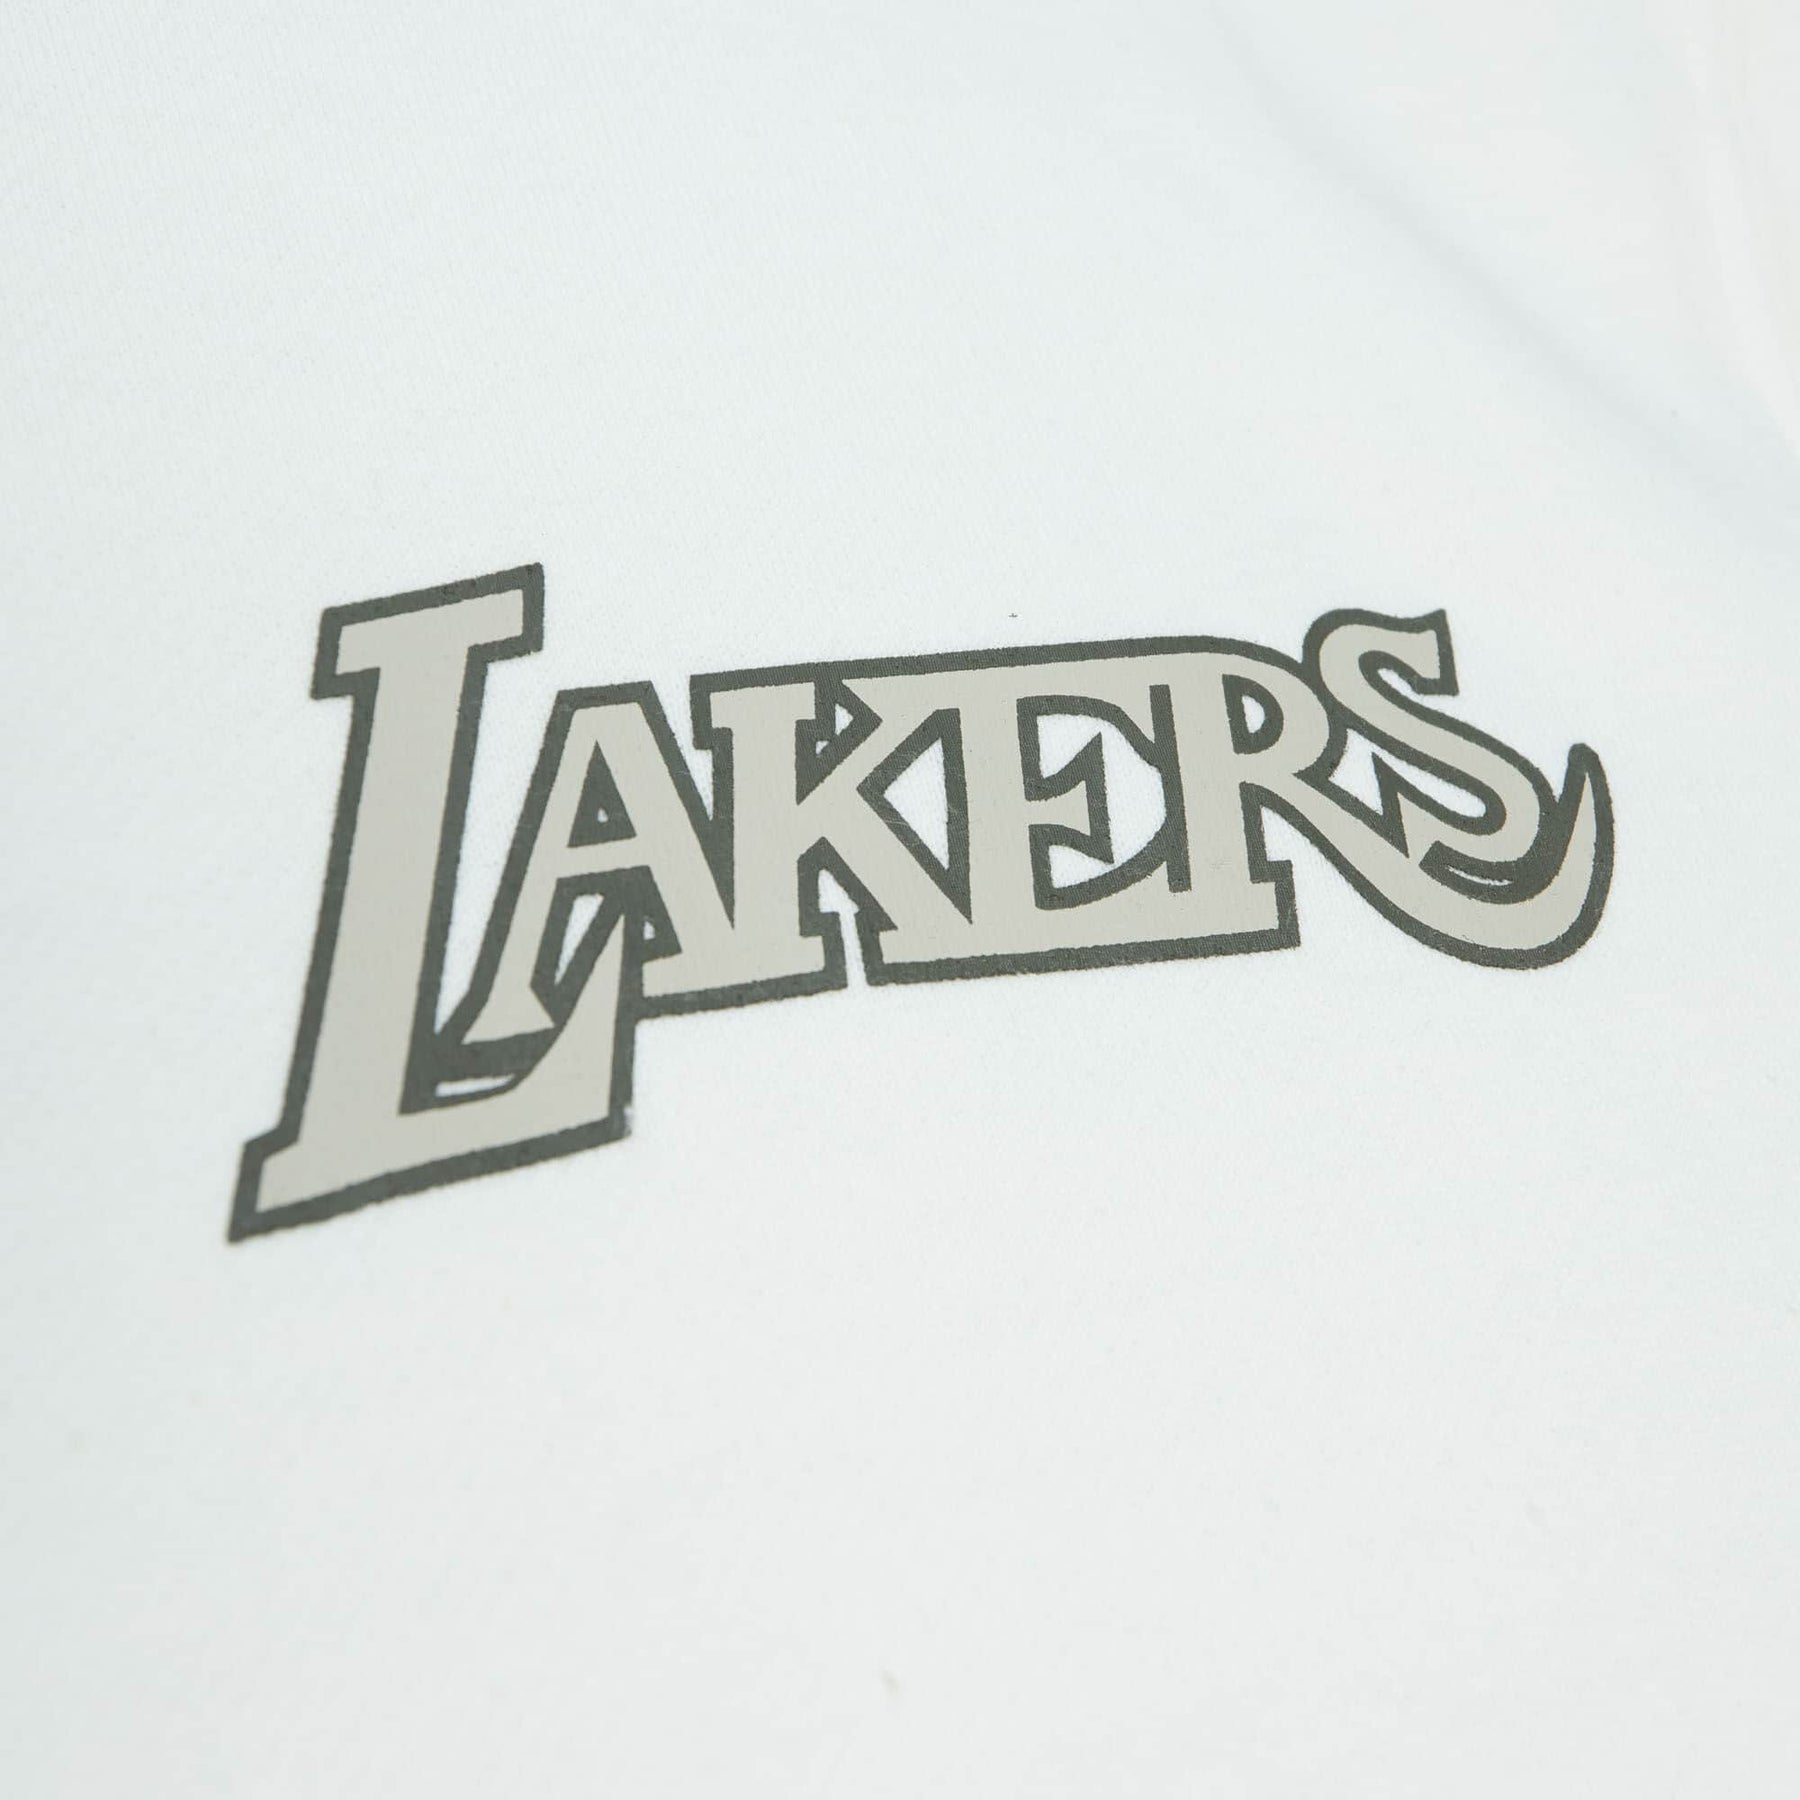 Mitchell & Ness Cream Hoody Los Angeles Lakers